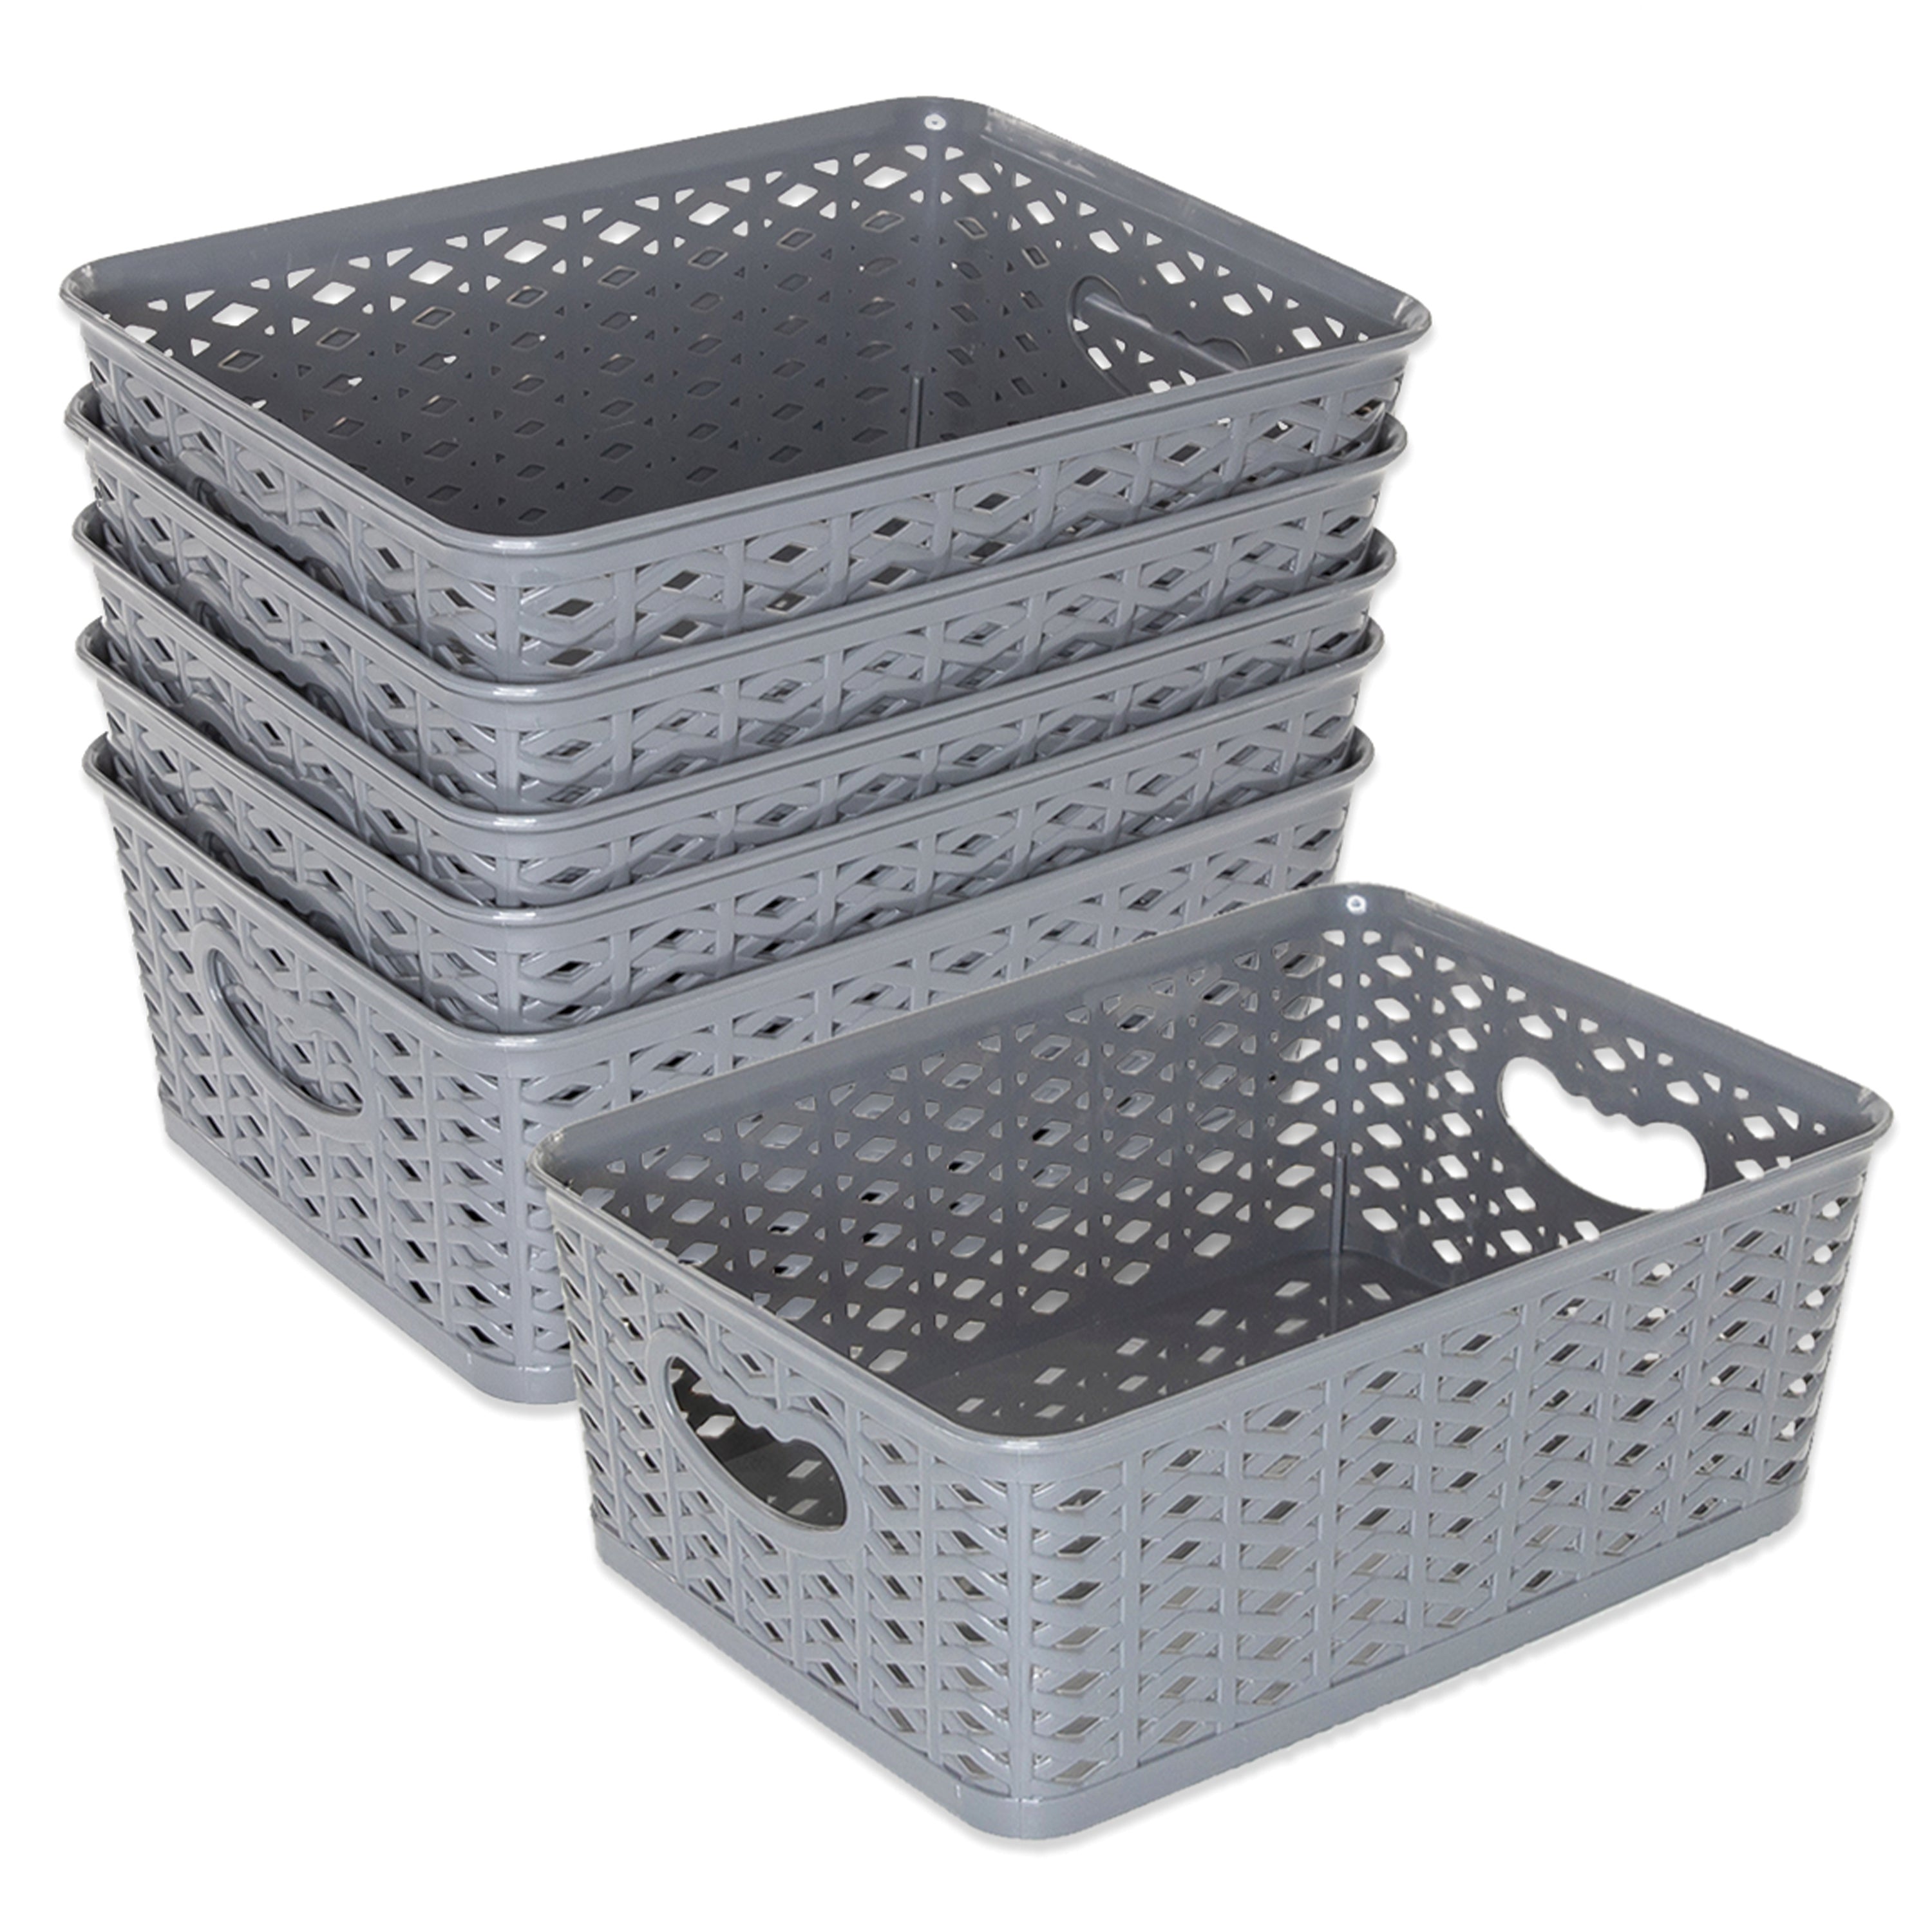 Pantry Storage Baskets Bin Small Plastic Gray Basket 6 Packs